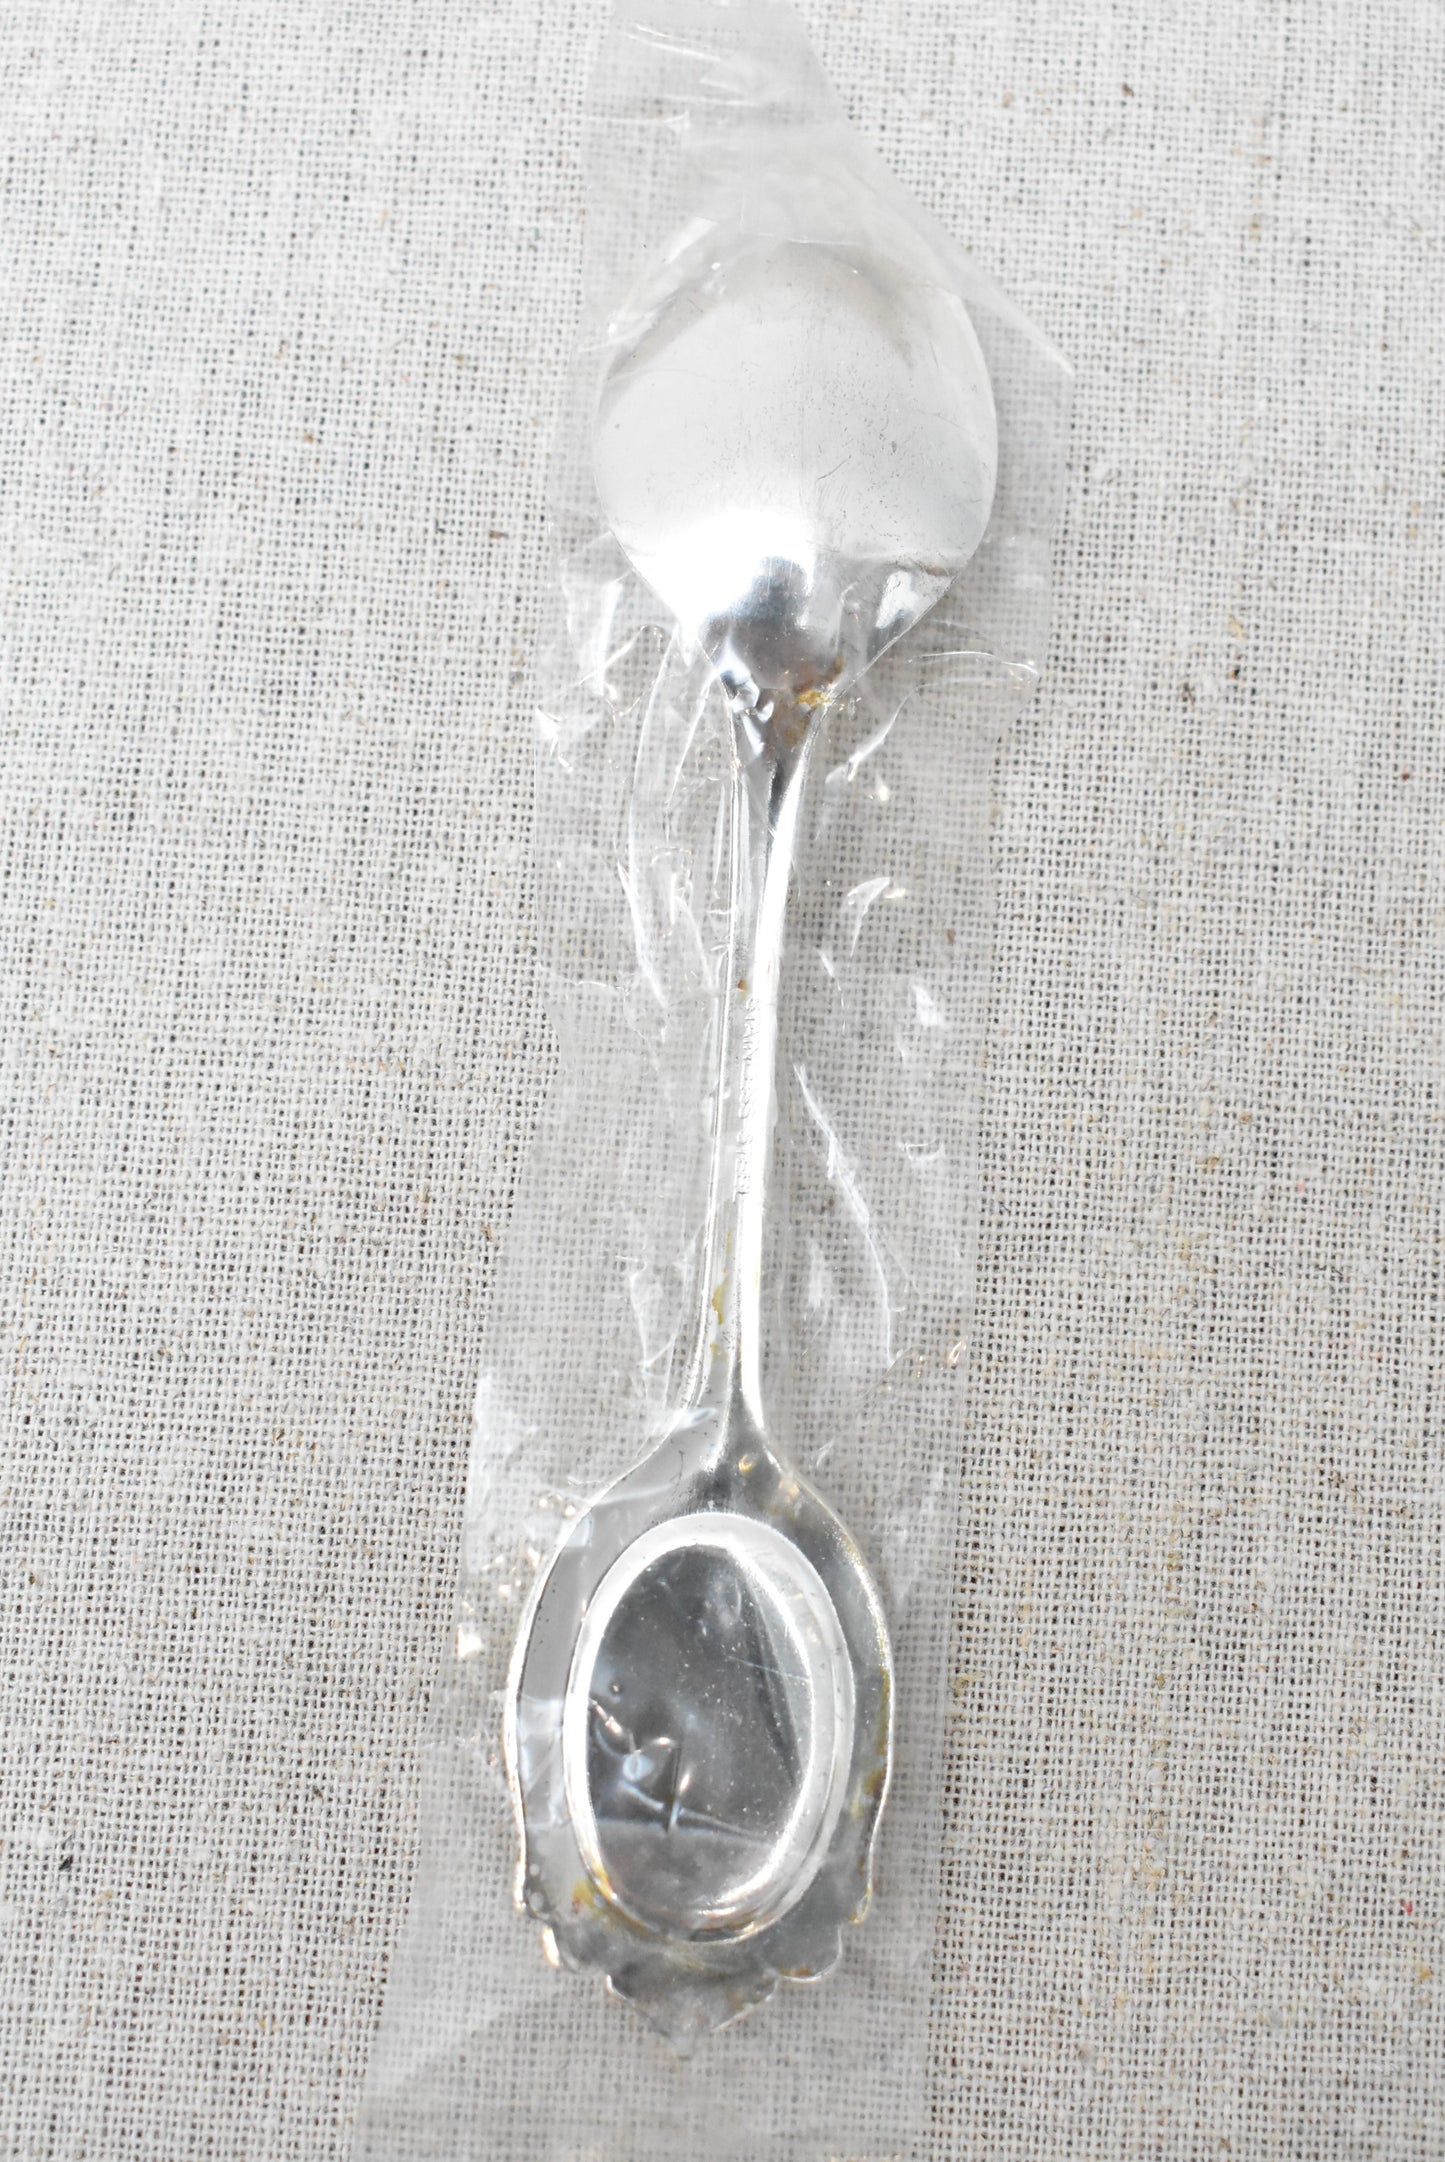 My Lovely teaspoon set